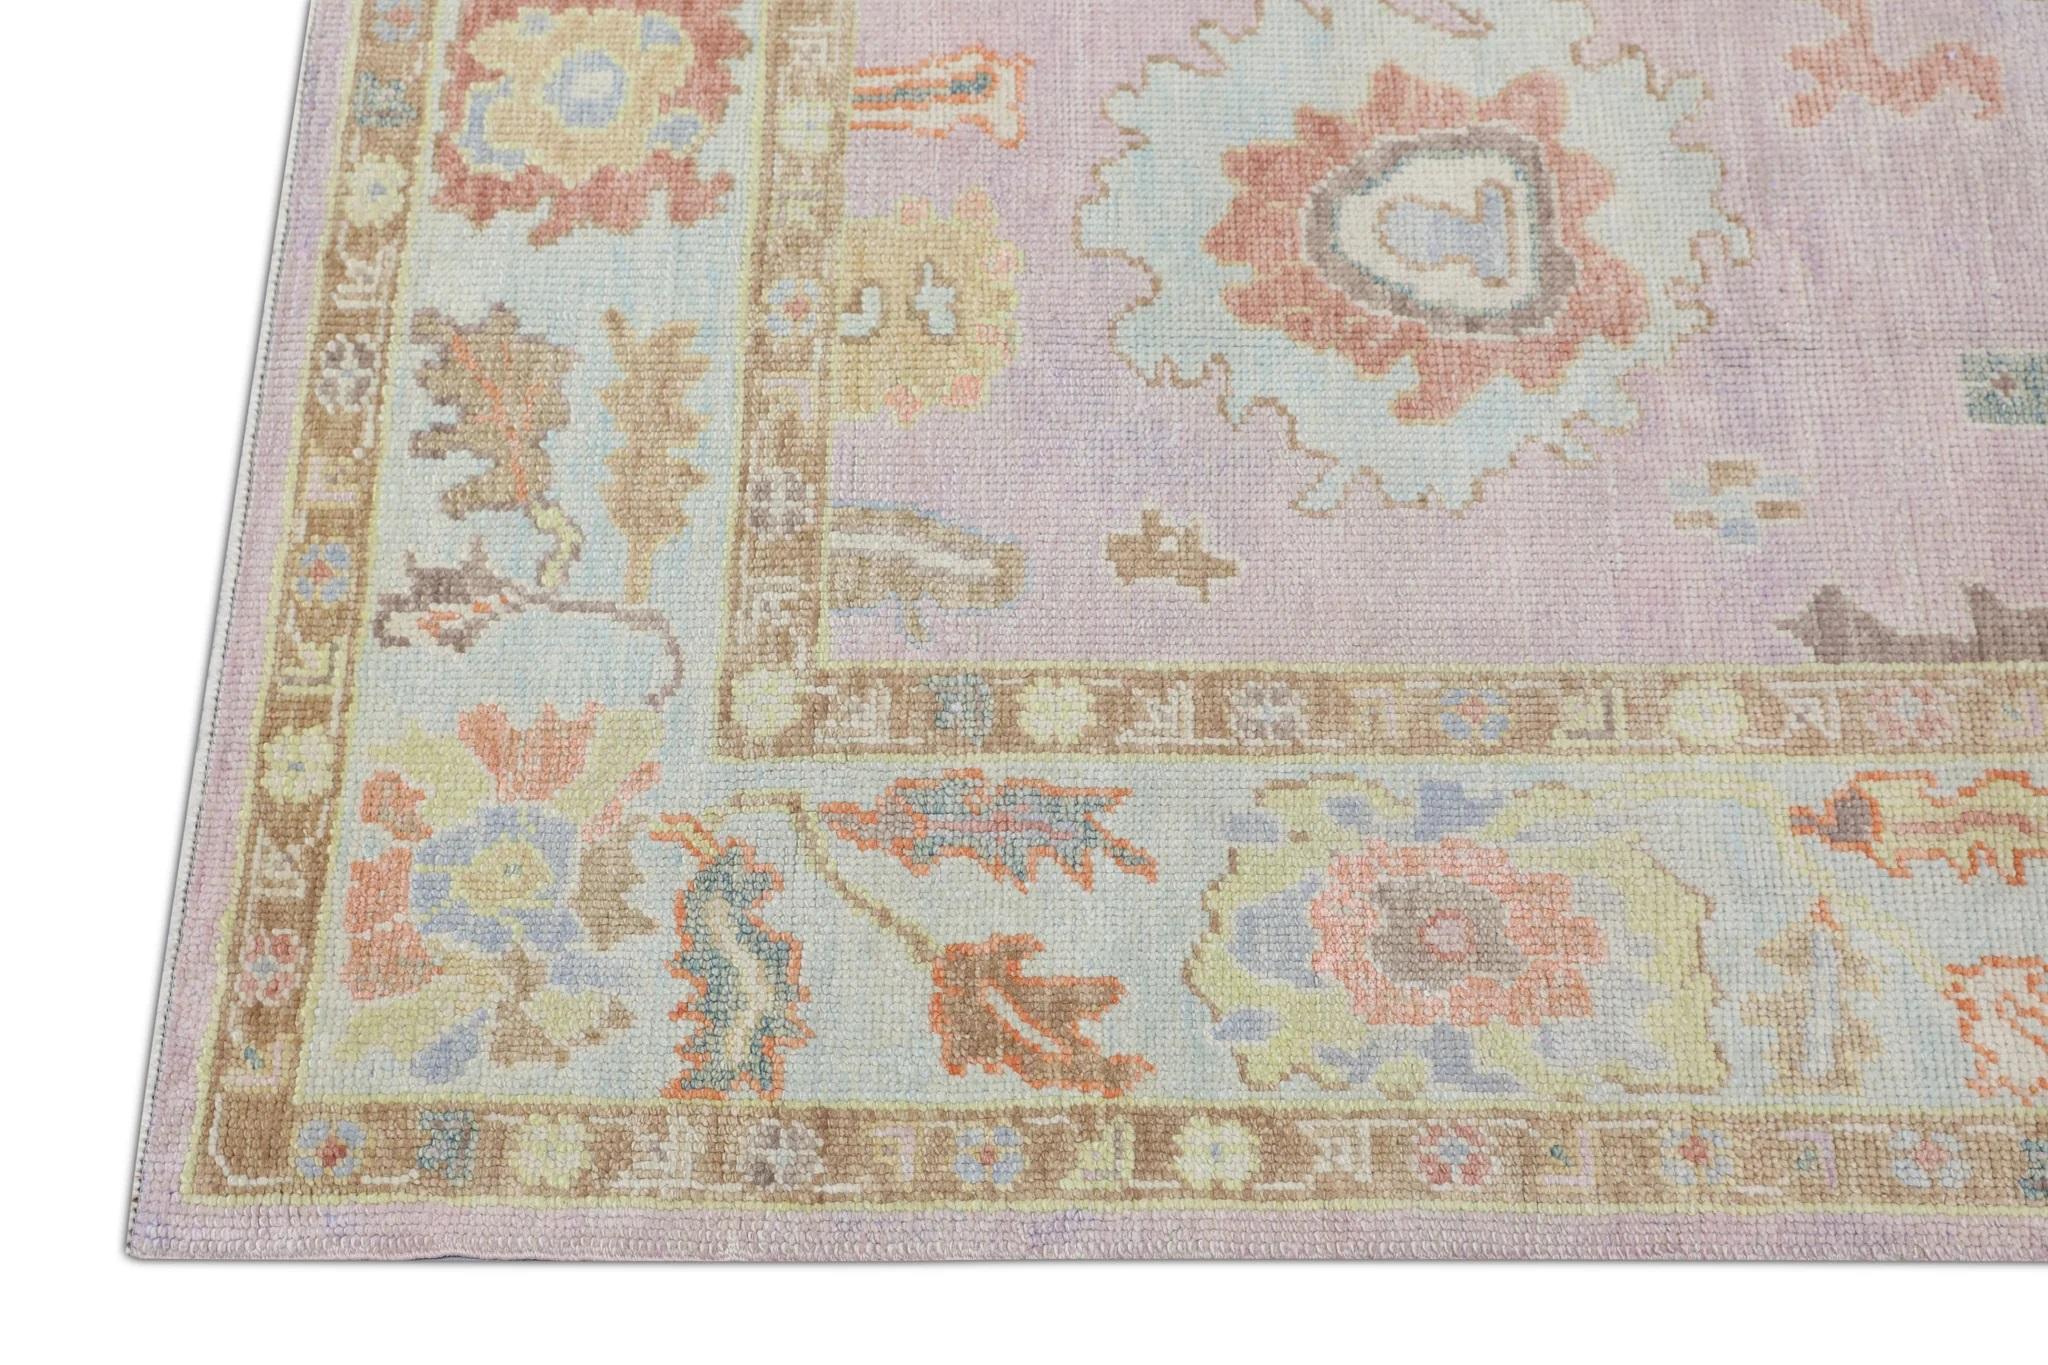 Pink and Blue Floral Design Handwoven Wool Turkish Oushak Rug 6'2